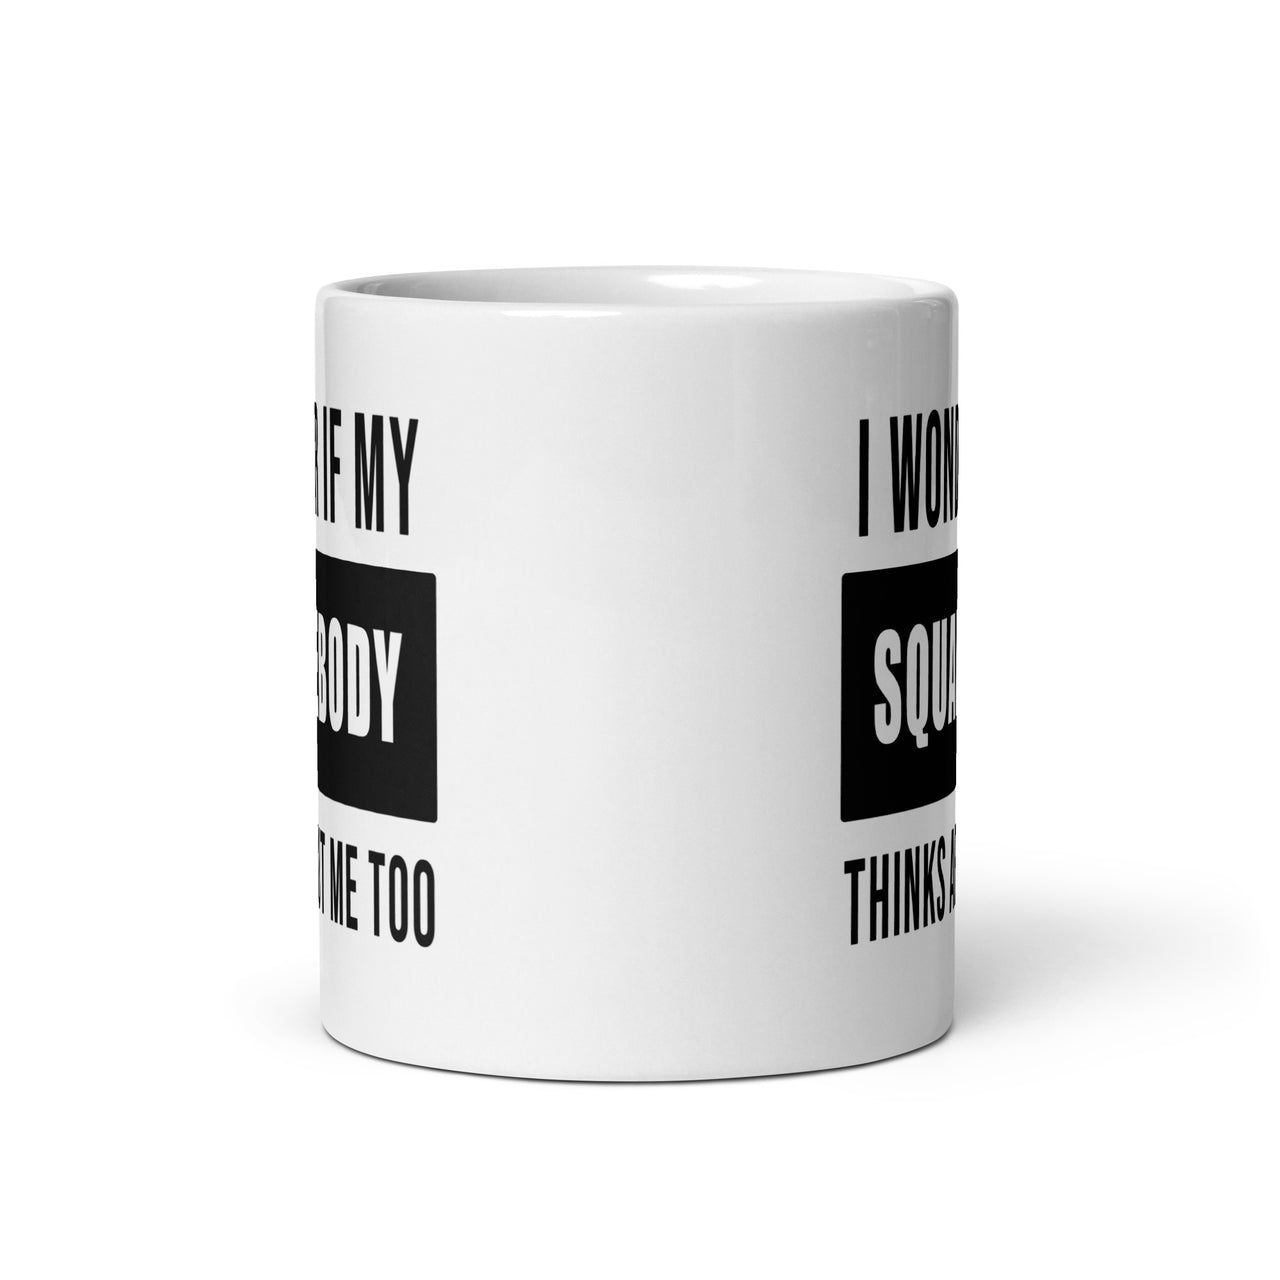 Squarebody Truck Coffee Mug Cup